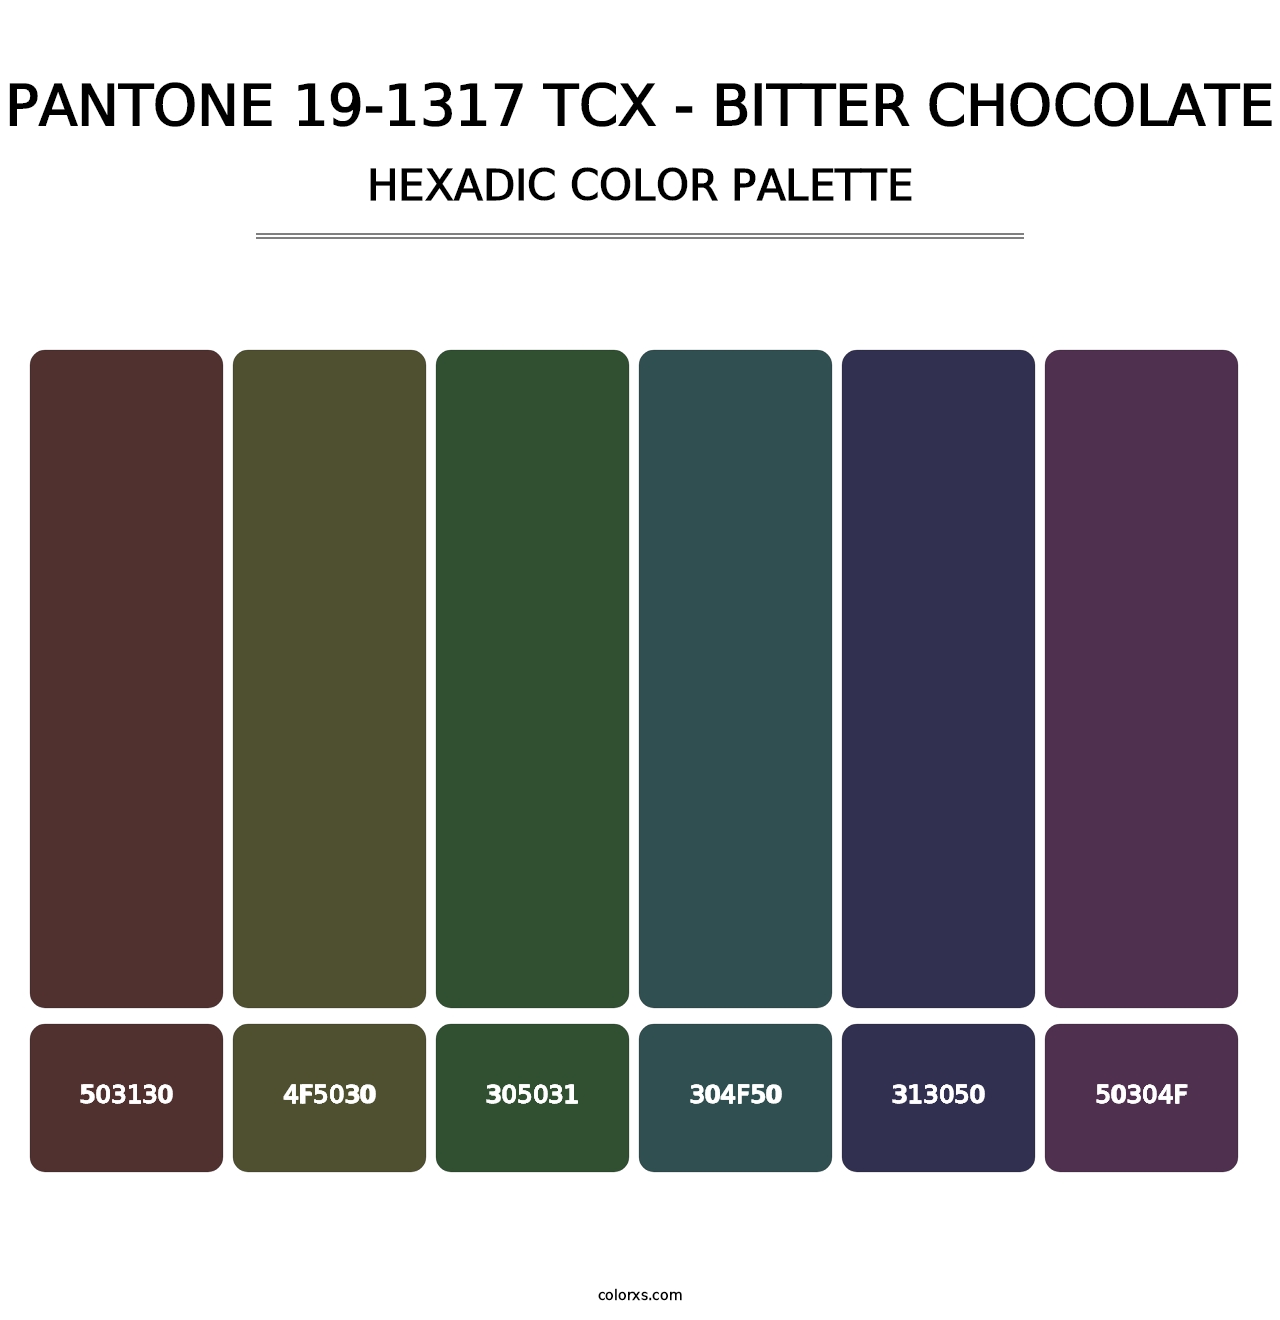 PANTONE 19-1317 TCX - Bitter Chocolate - Hexadic Color Palette